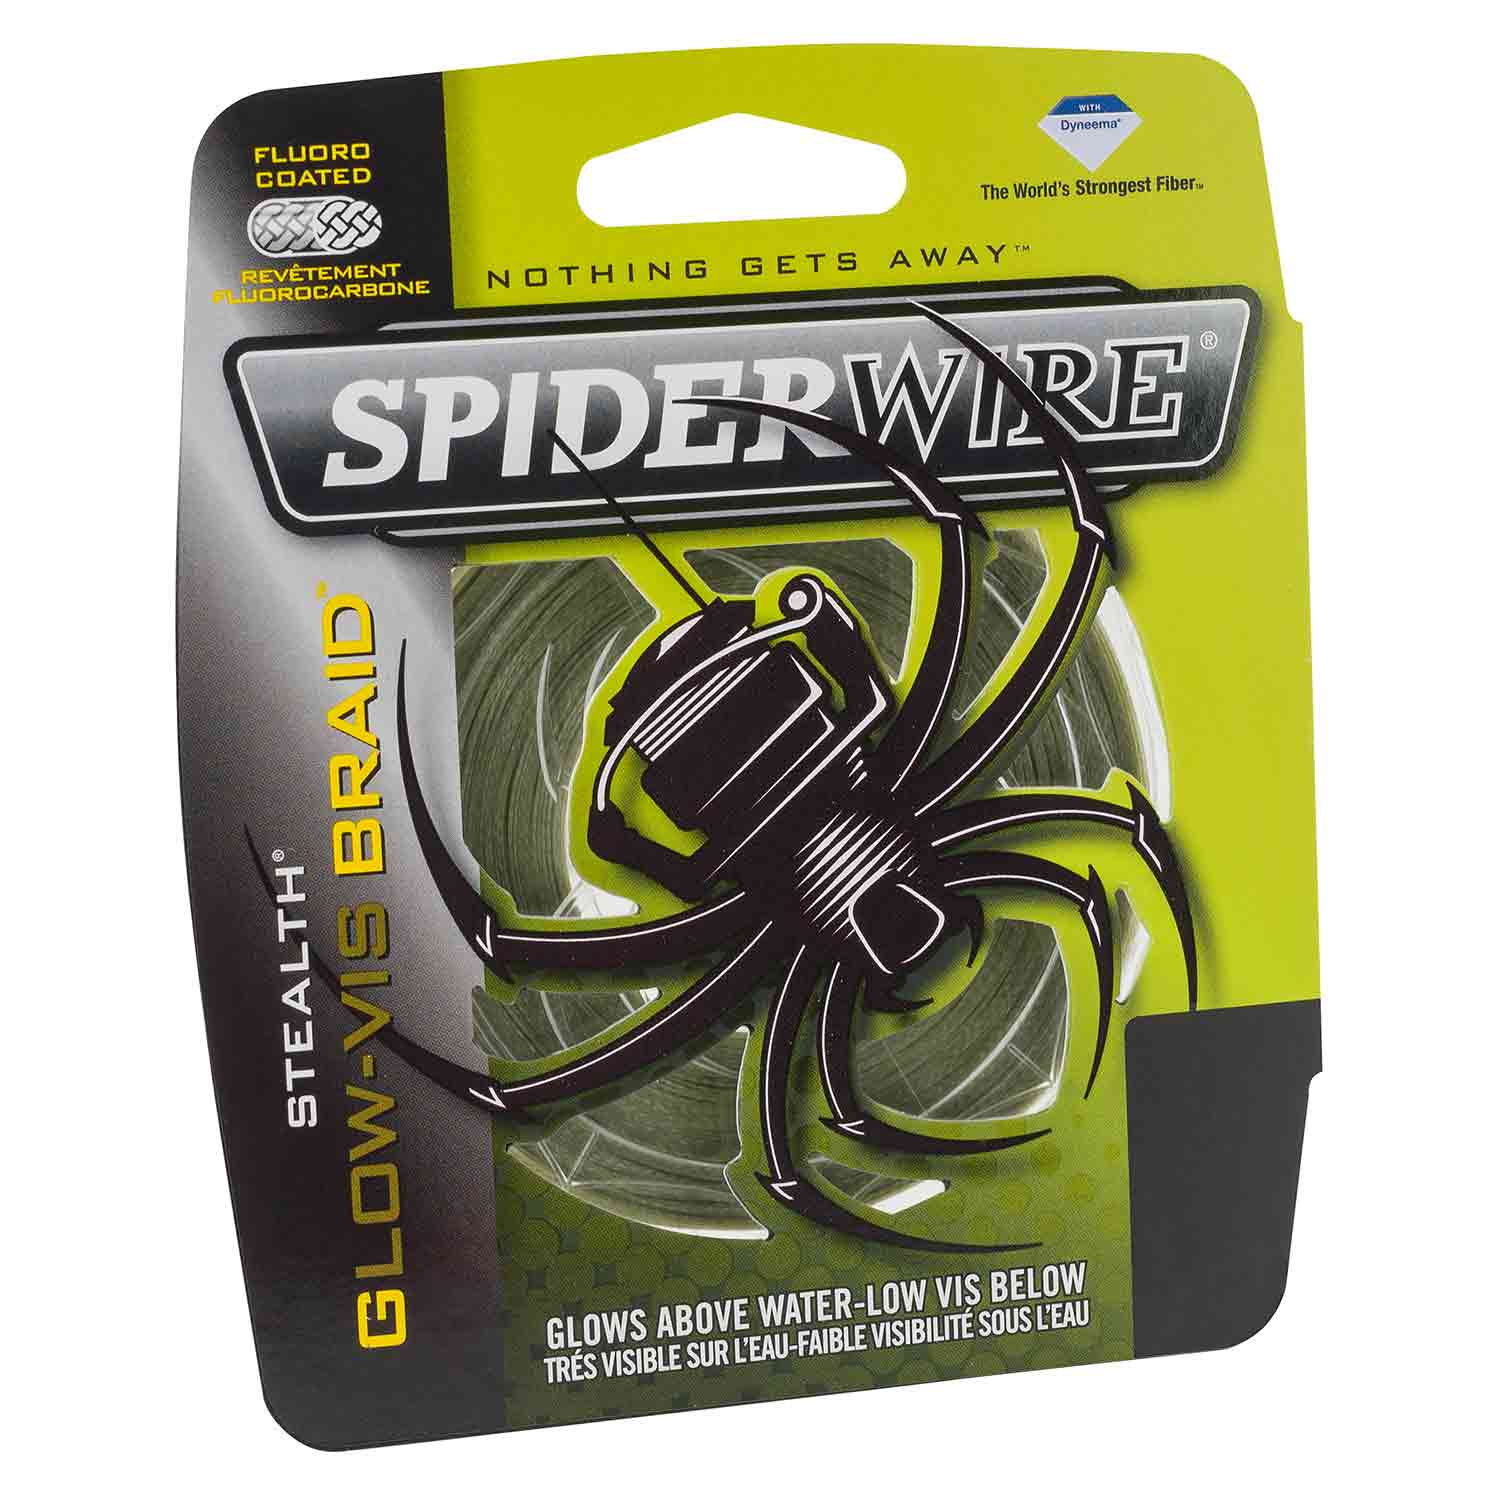 Spiderwire Stealth Braided Fishing Line, Green 500-yd